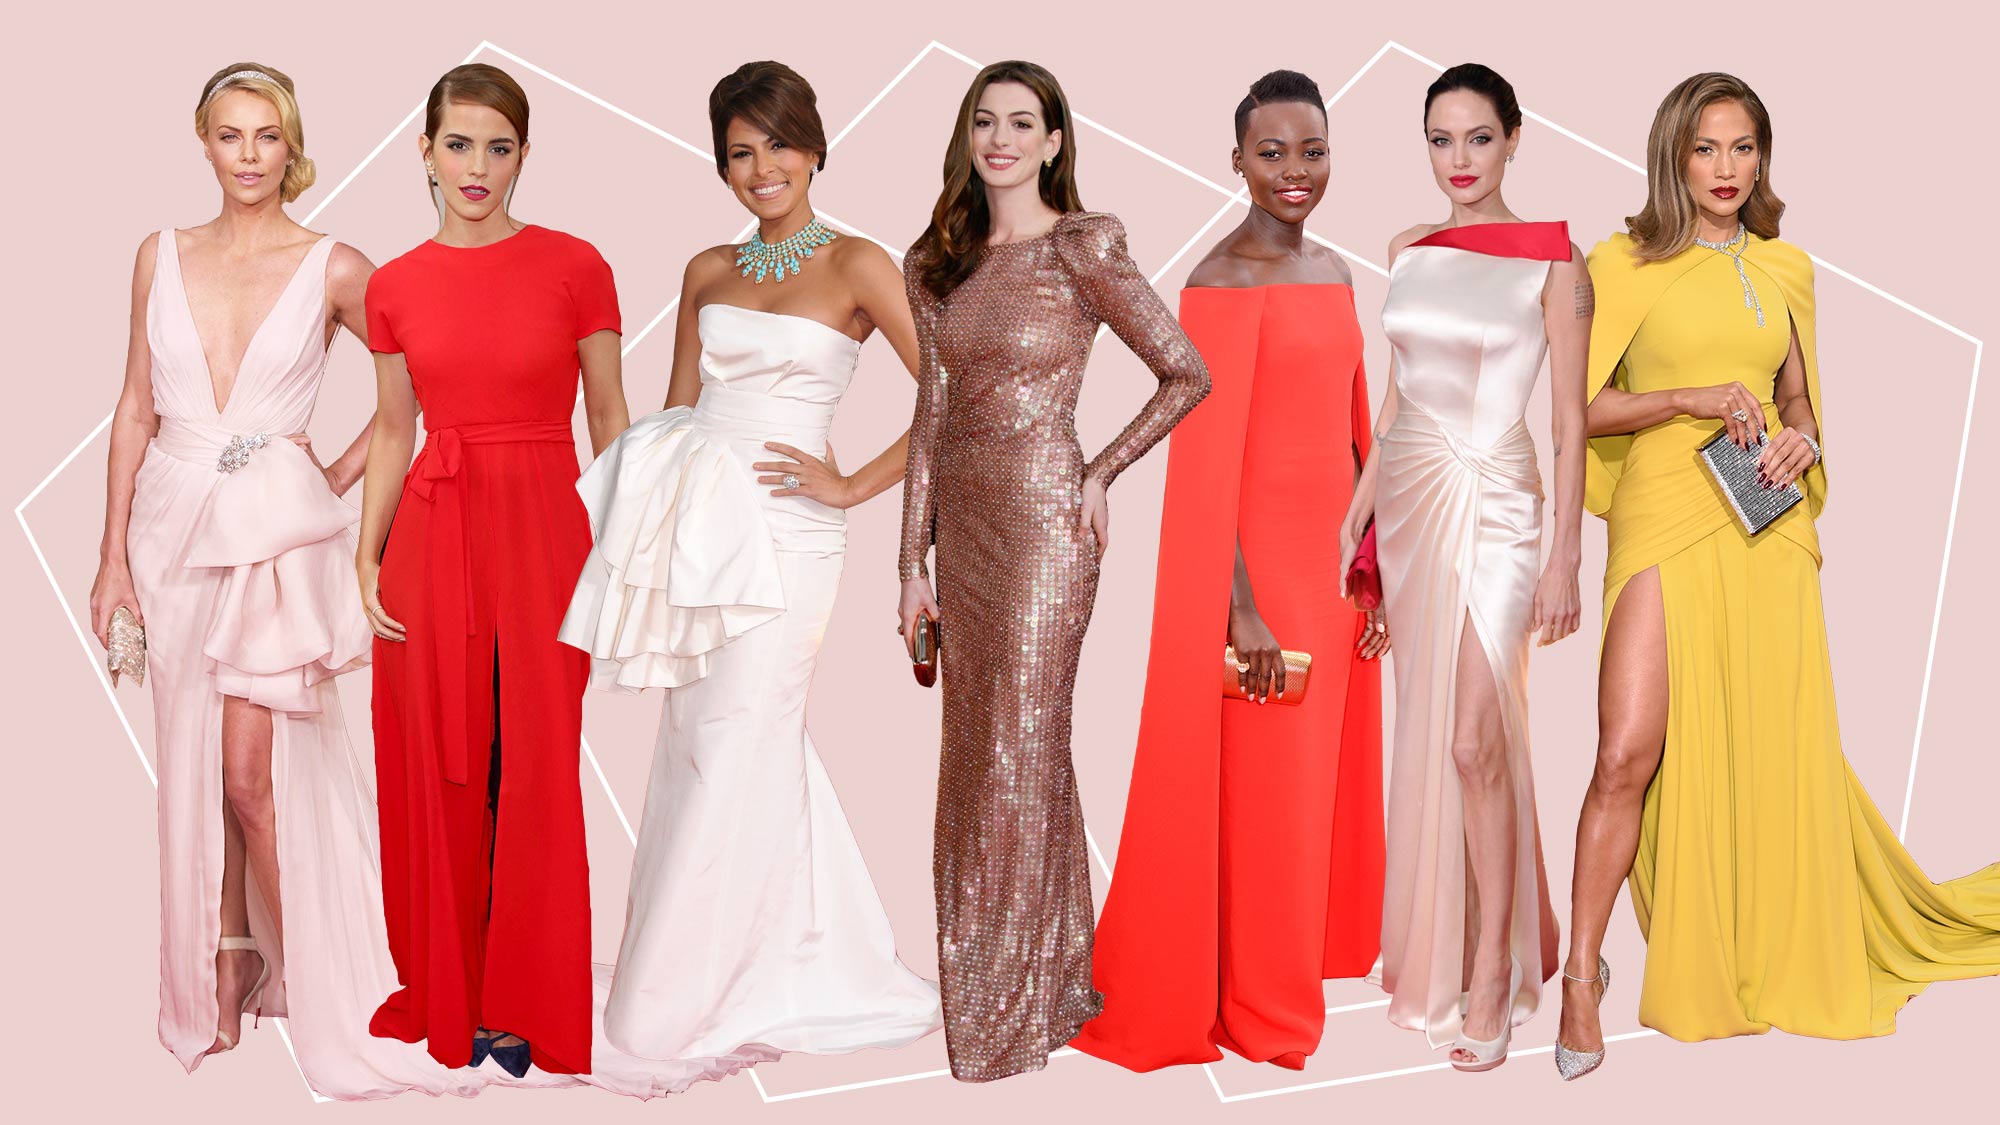 Jennifer Aniston's Dior Golden Globes Dress Is a High-Fashion